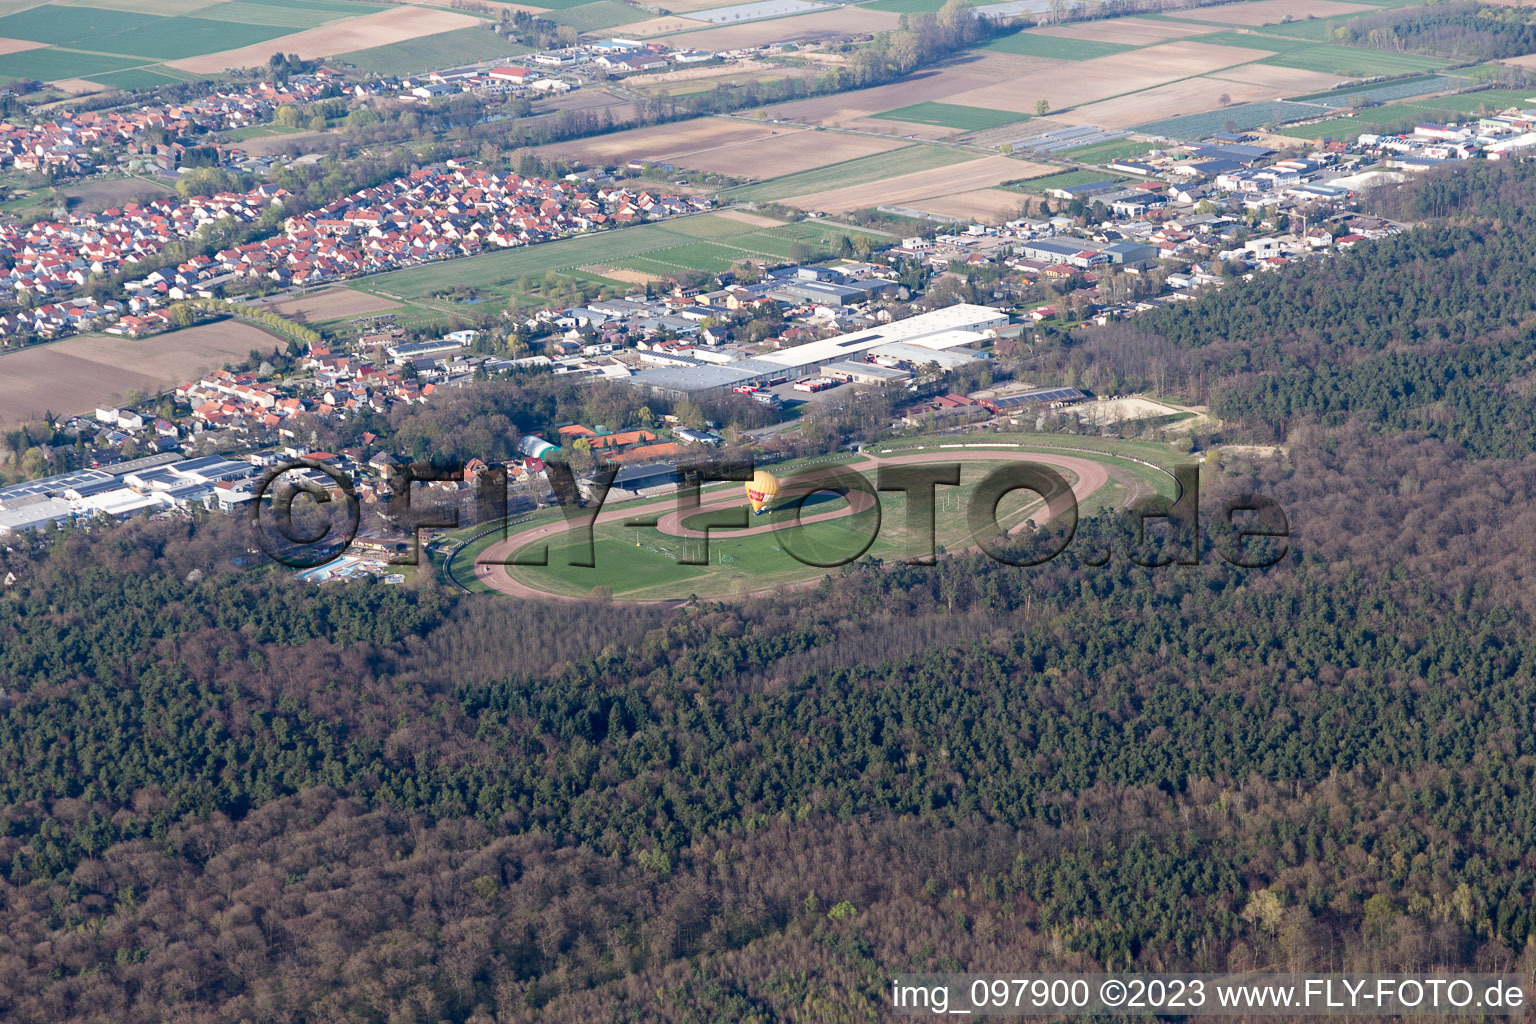 District Herxheim in Herxheim bei Landau/Pfalz in the state Rhineland-Palatinate, Germany seen from a drone